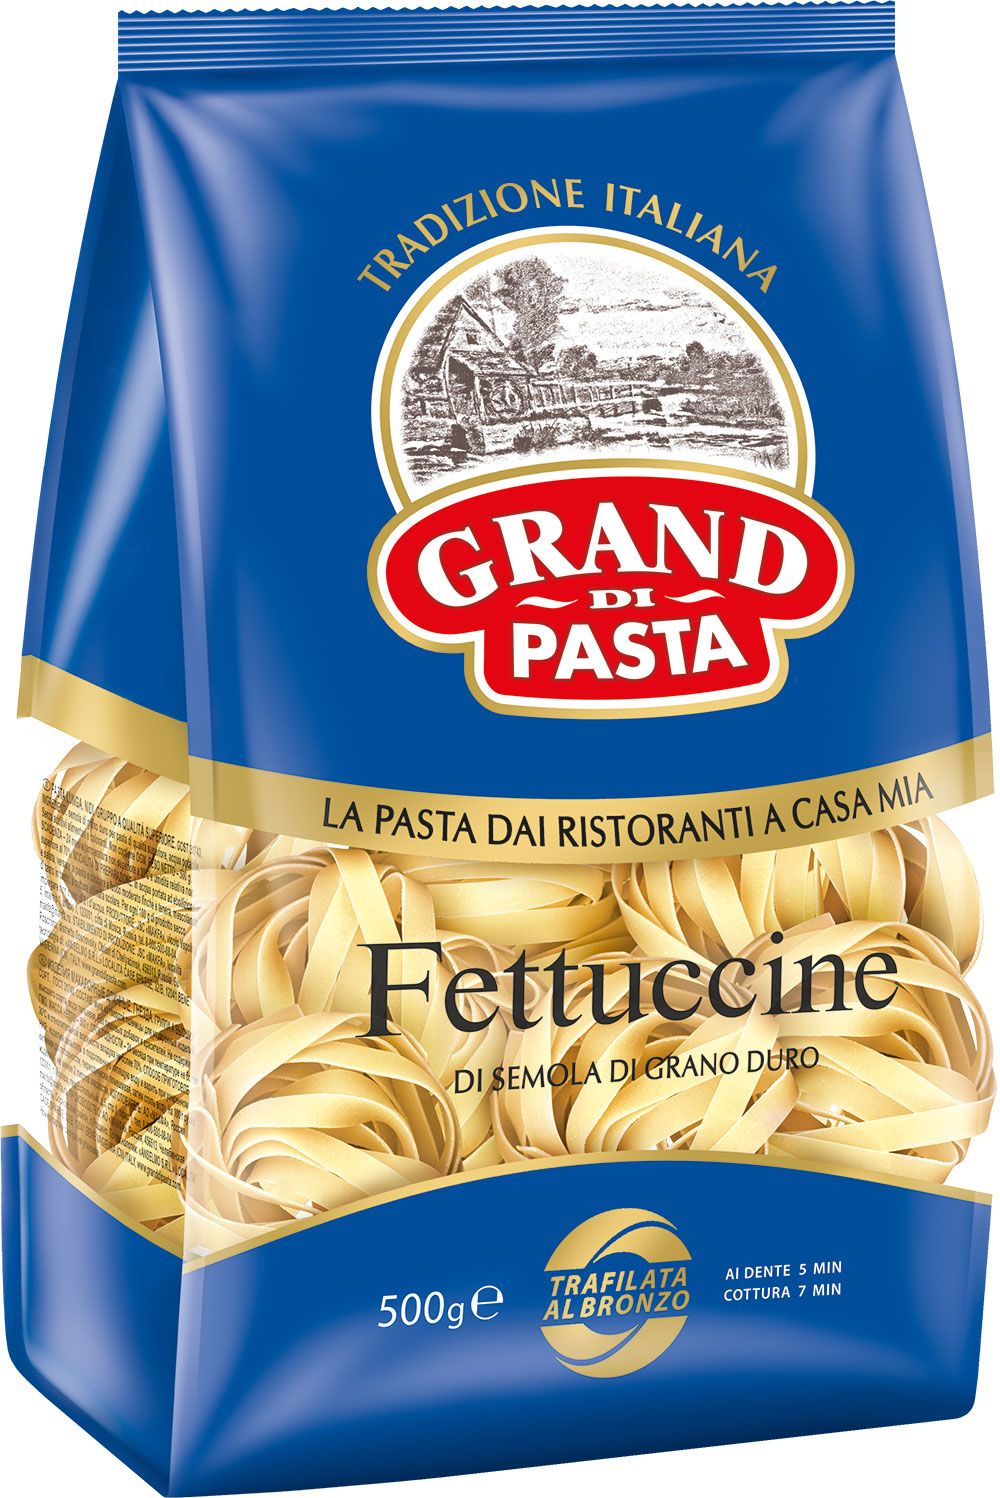 Grand di pasta Fettuccine 500 г. Макаронные изделия "Grand di pasta" funghetti, 500г. Макаронные изделия Grand di pasta, 500гр. Макароны Grand di pasta 500 гр Fusilli.